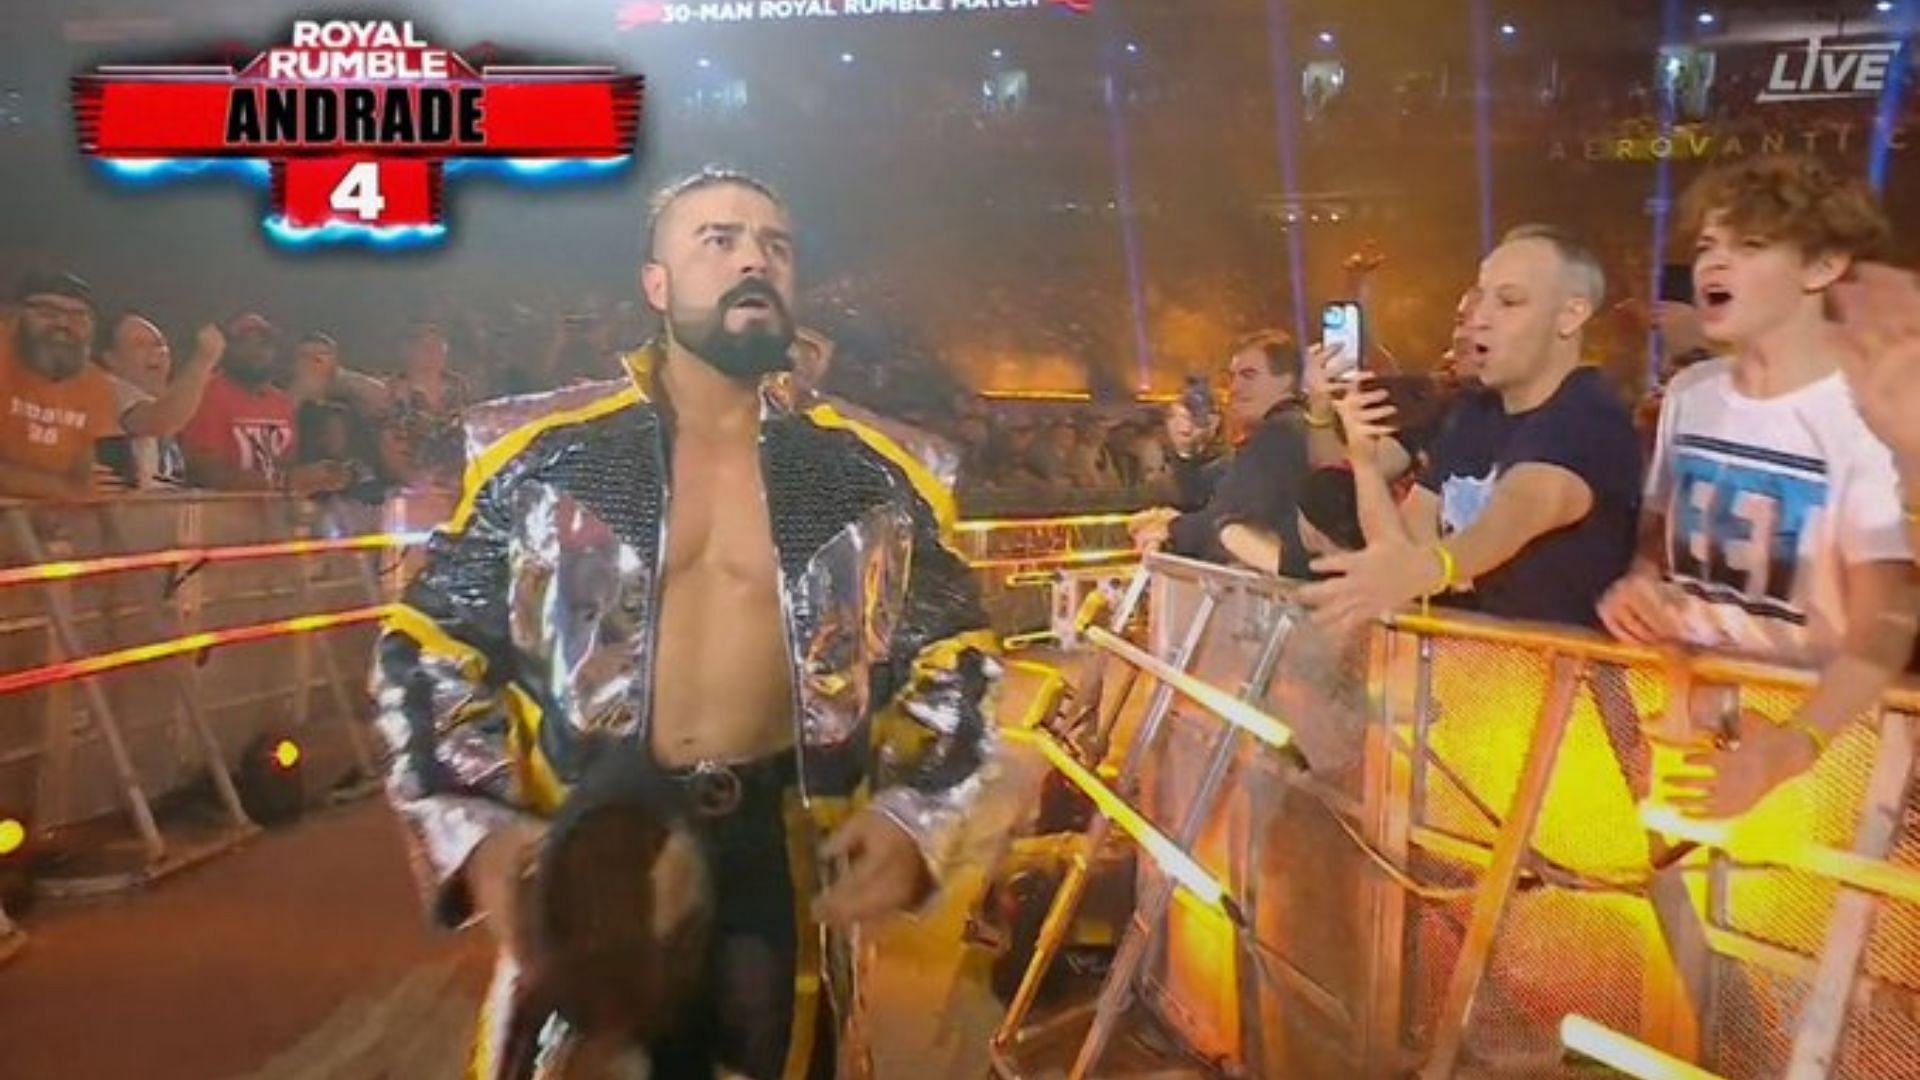 Andrade El Idolo is back in WWE (Image Credits: Royal Rumble screengrabs on X)